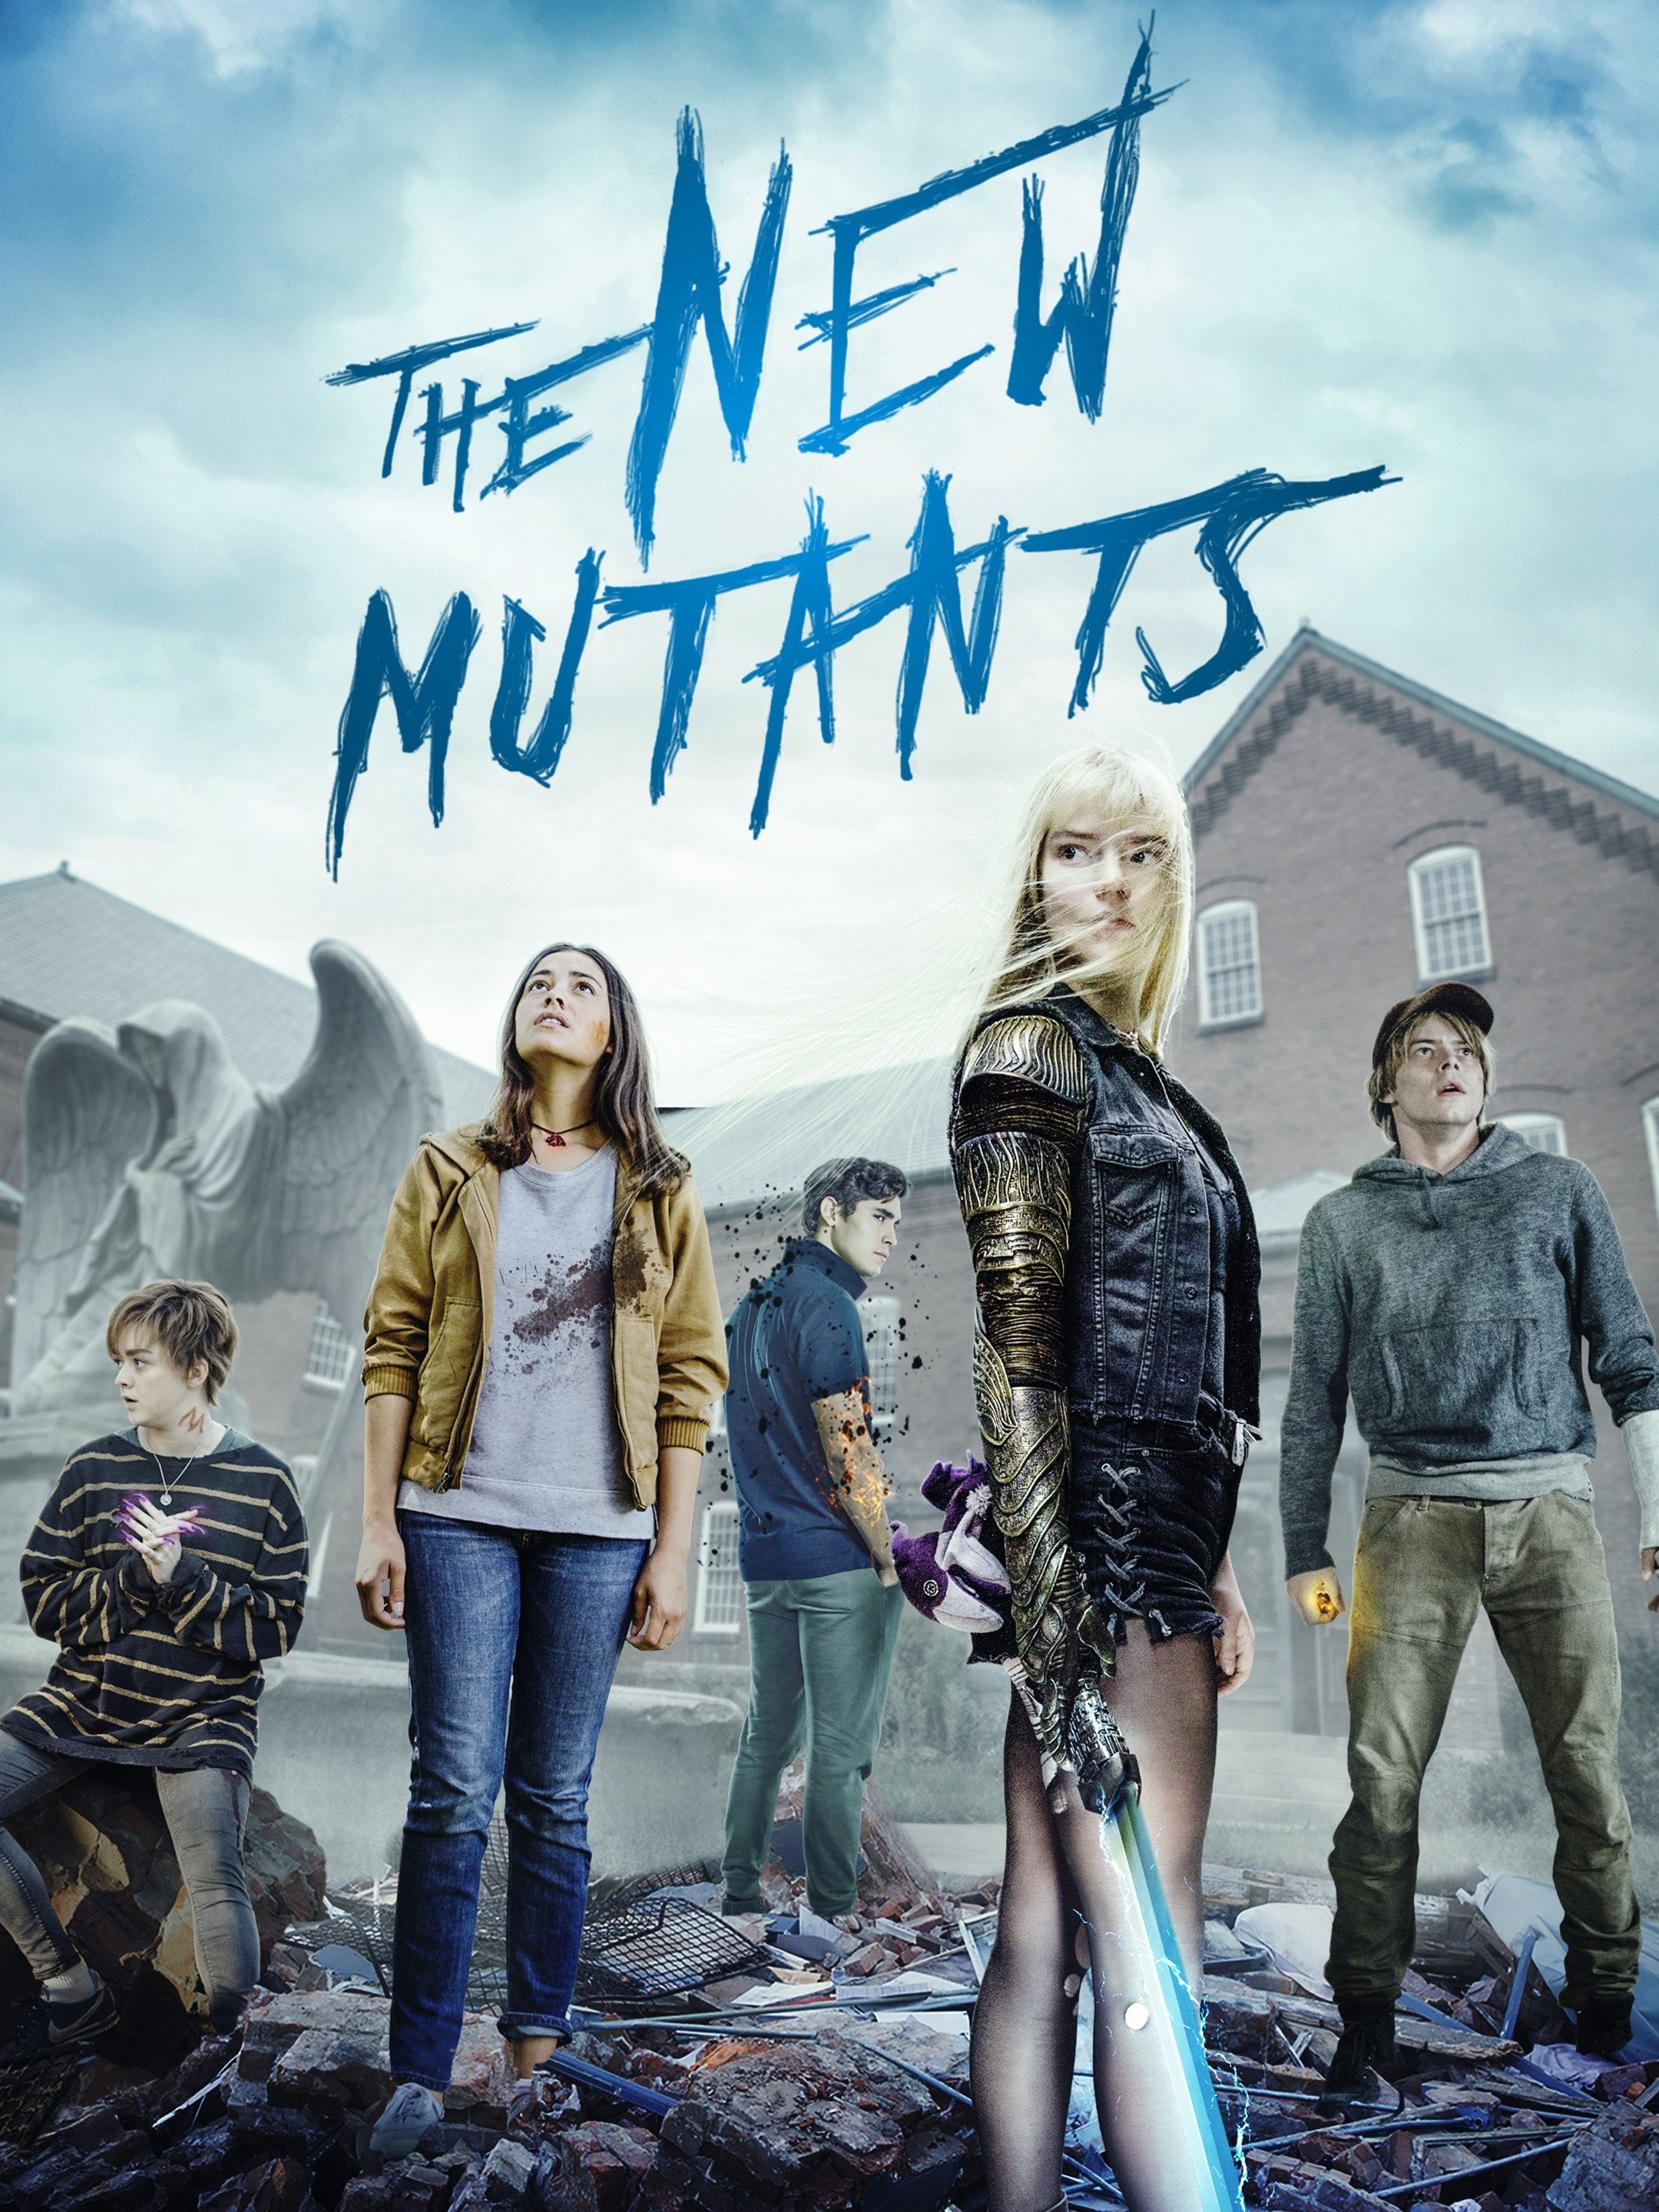 The New Mutants: First Trailer Reveals X-Men Horror Movie